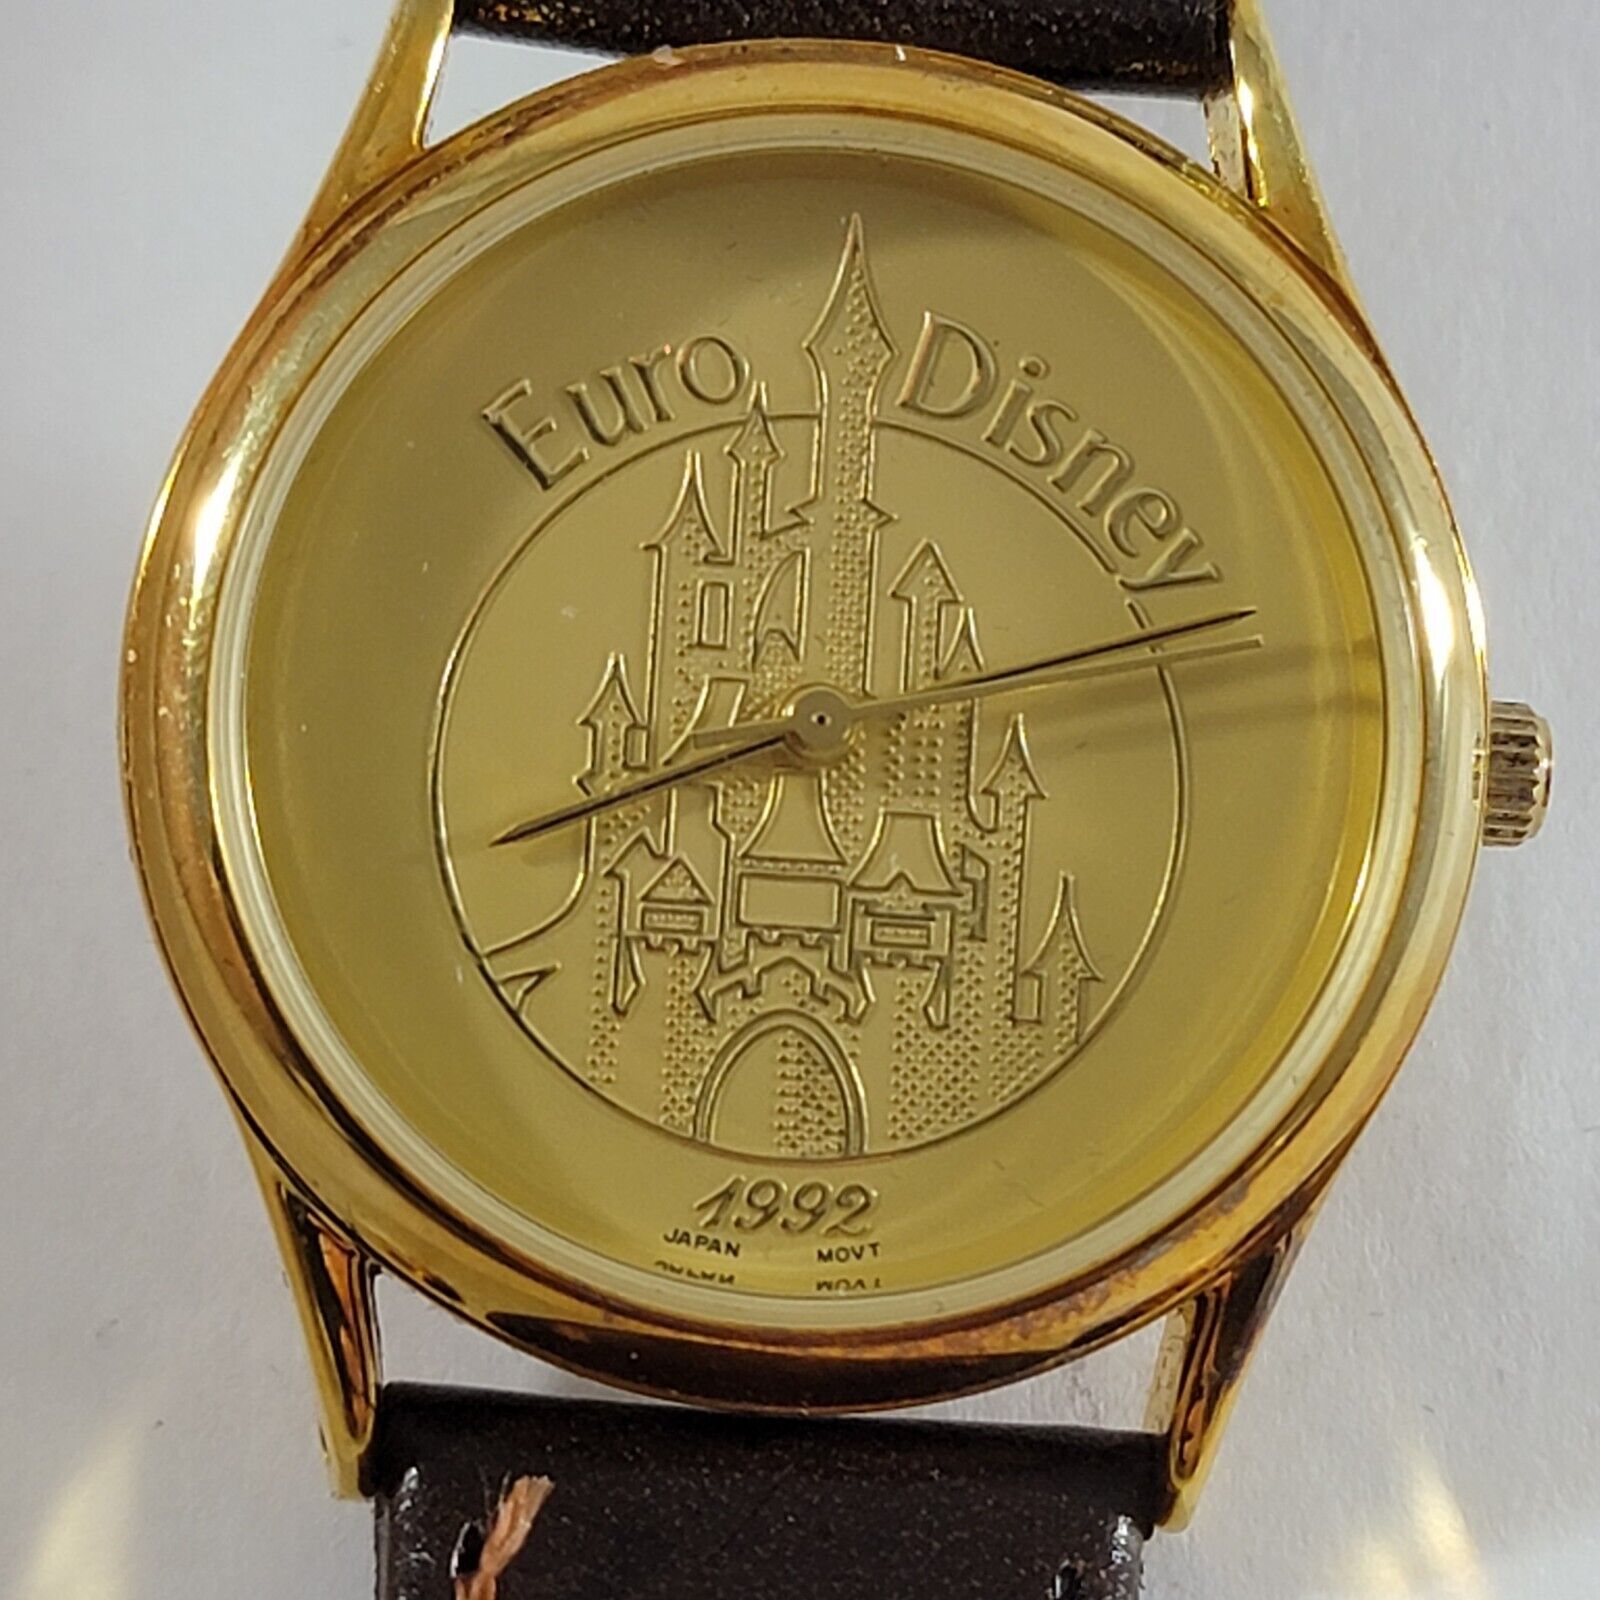 Euro Disney 1992 Wrist Watch Commemorative Ed Gold Castle Euro Disneyland Paris